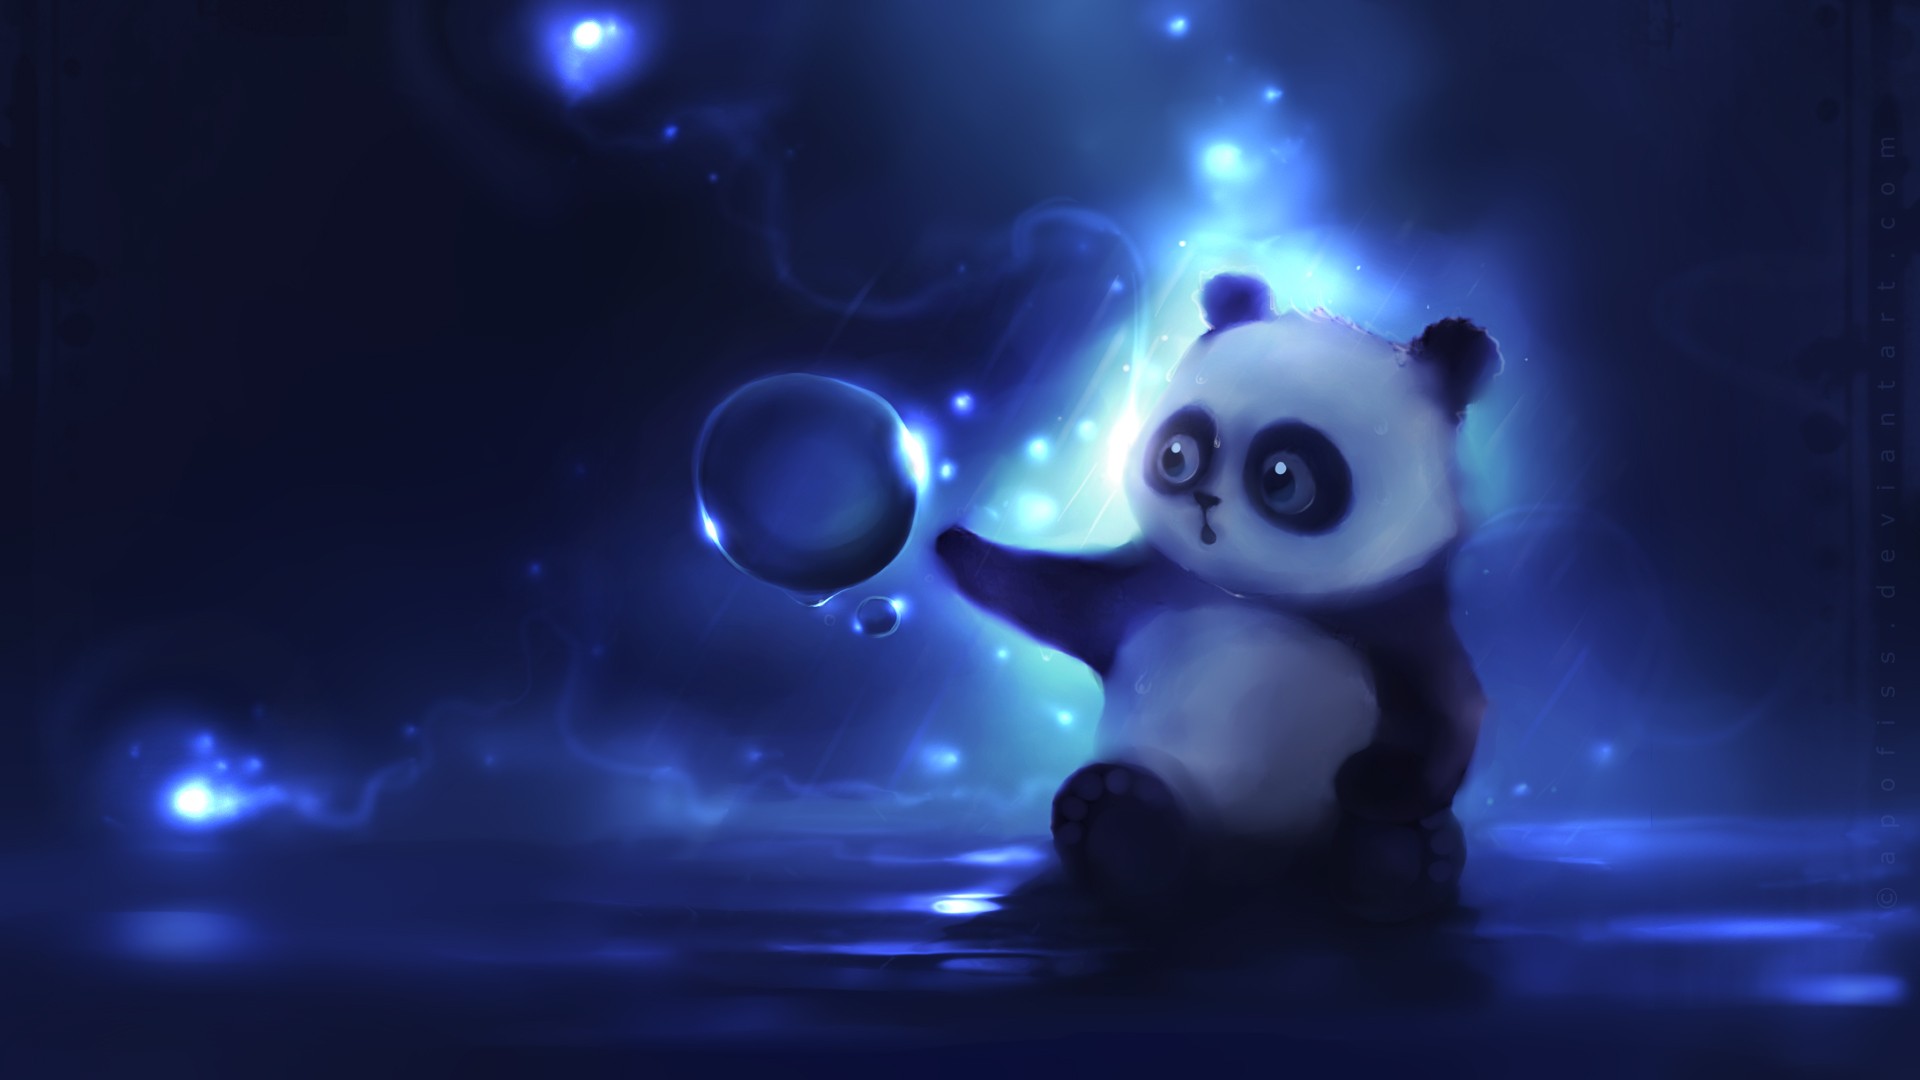 Fractal Wallpapers - Cute Cartoon Wallpaper Panda - HD Wallpaper 